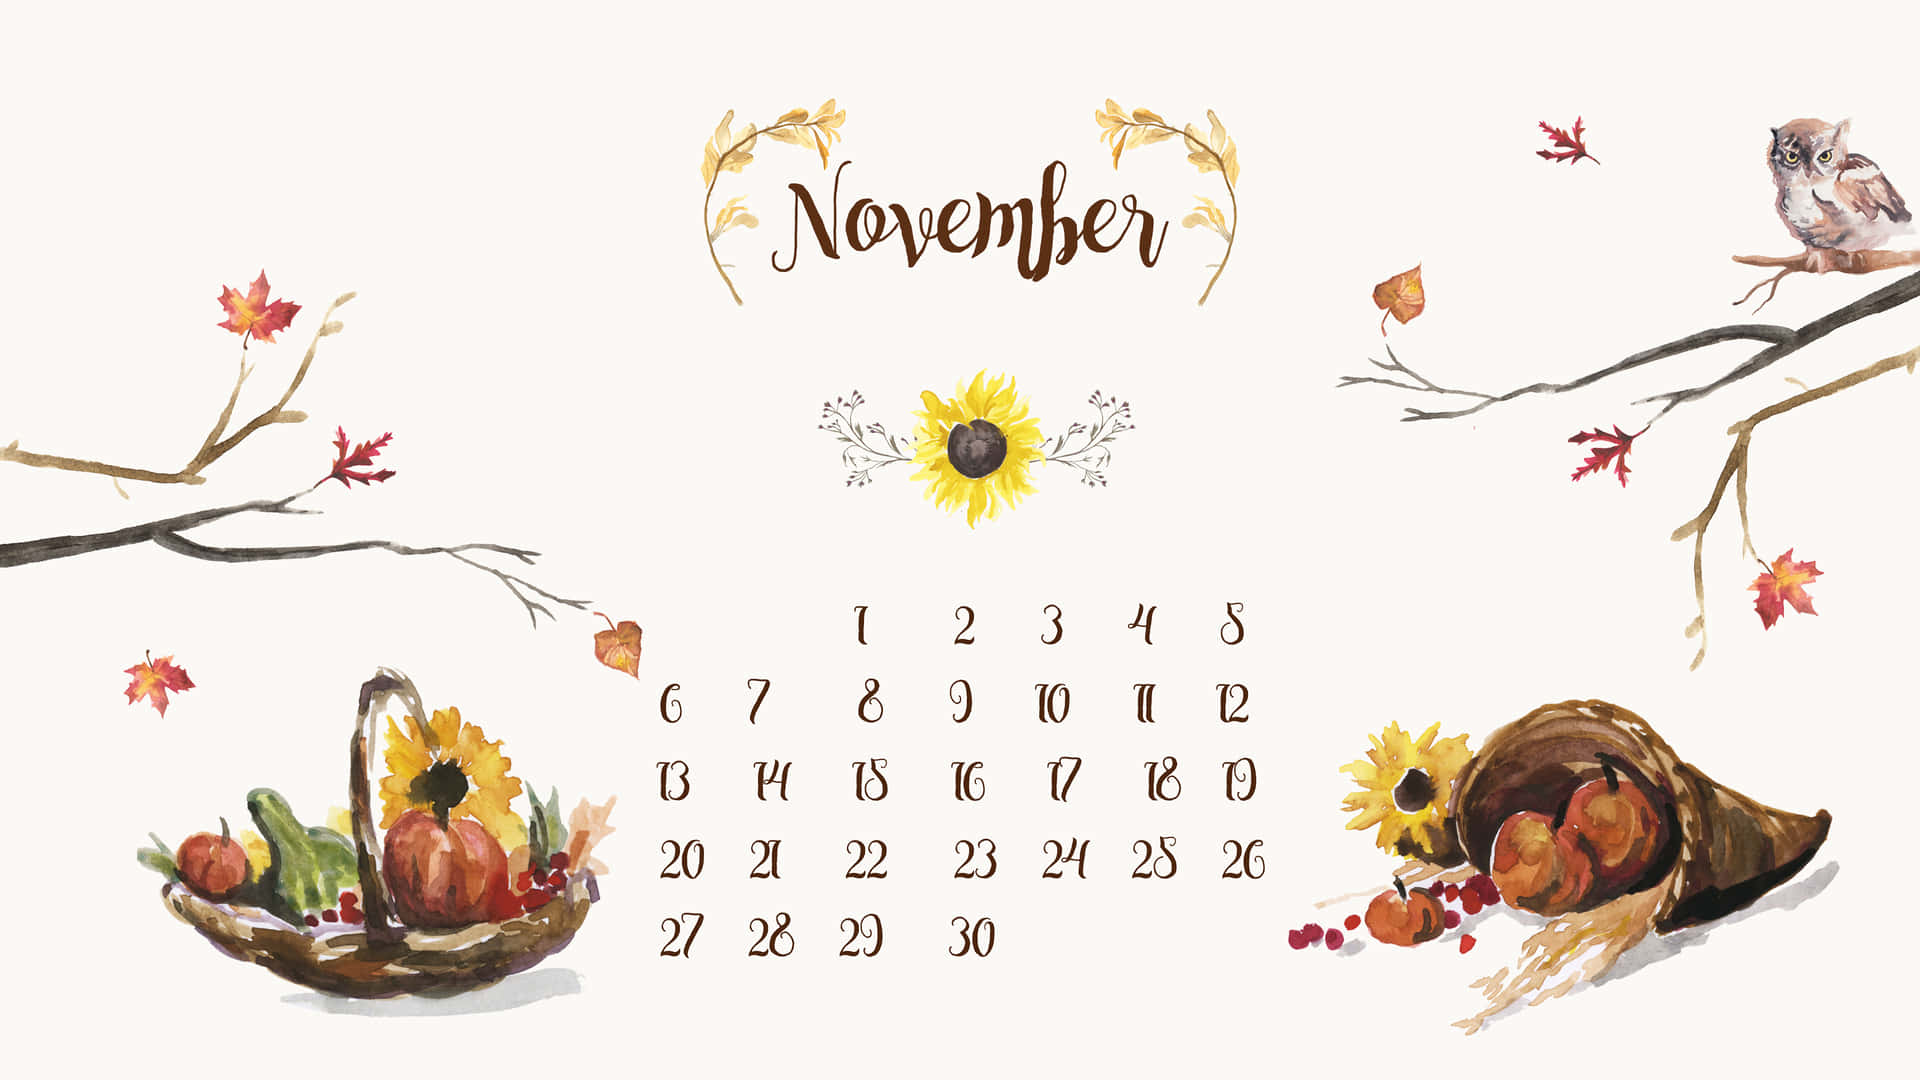 November Calendar Wallpaper With Sunflowers And Birds